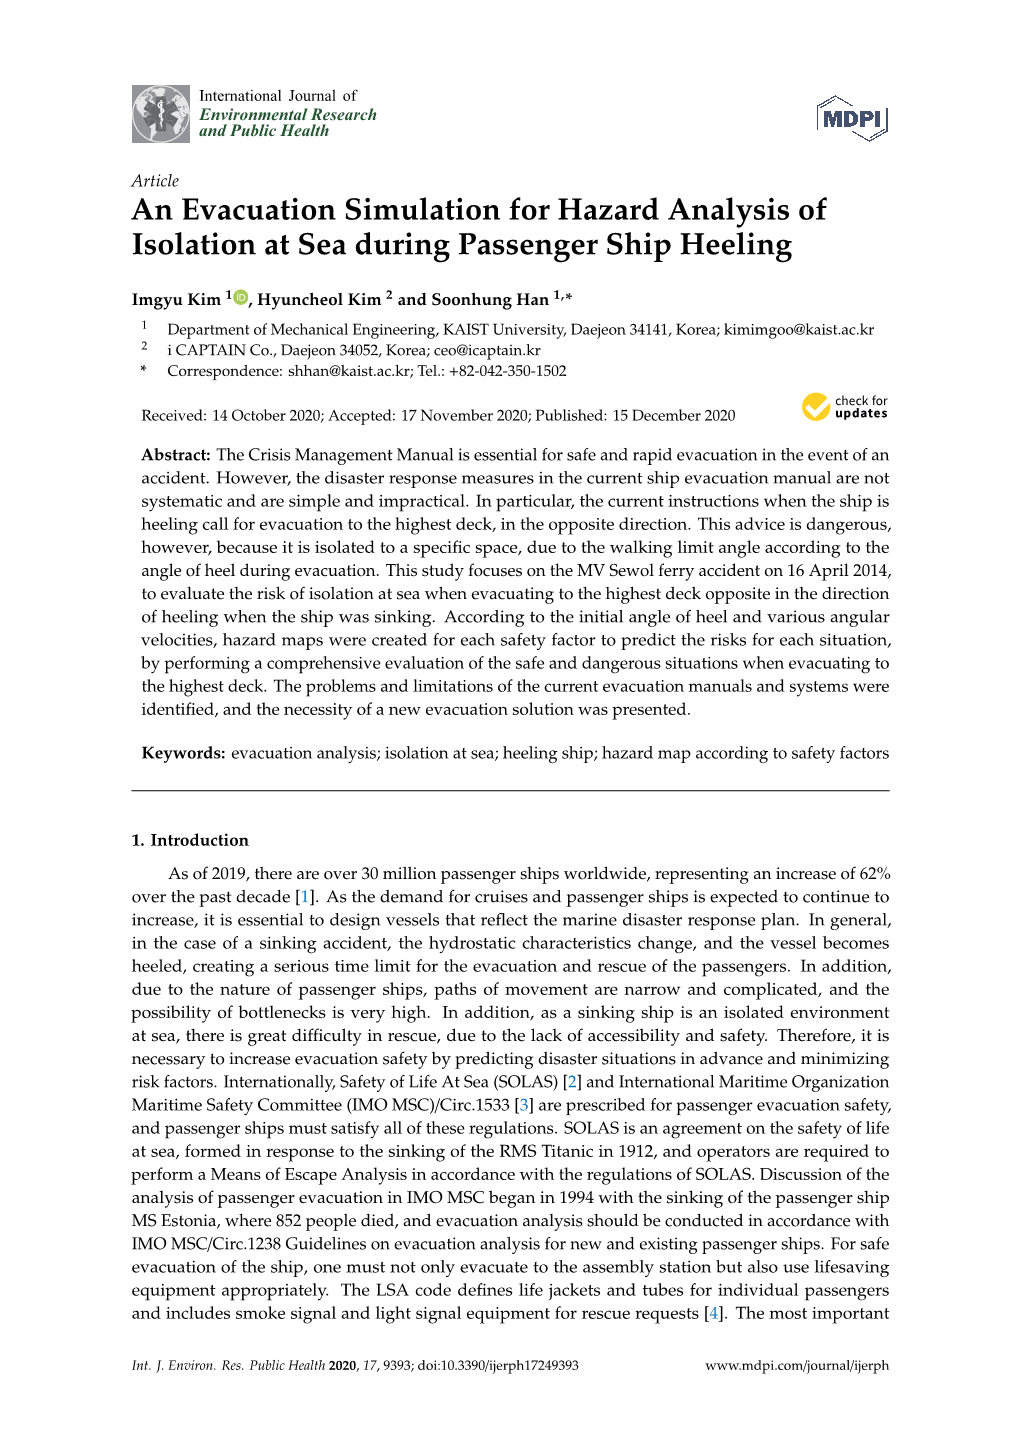 An Evacuation Simulation for Hazard Analysis of Isolation at Sea During Passenger Ship Heeling